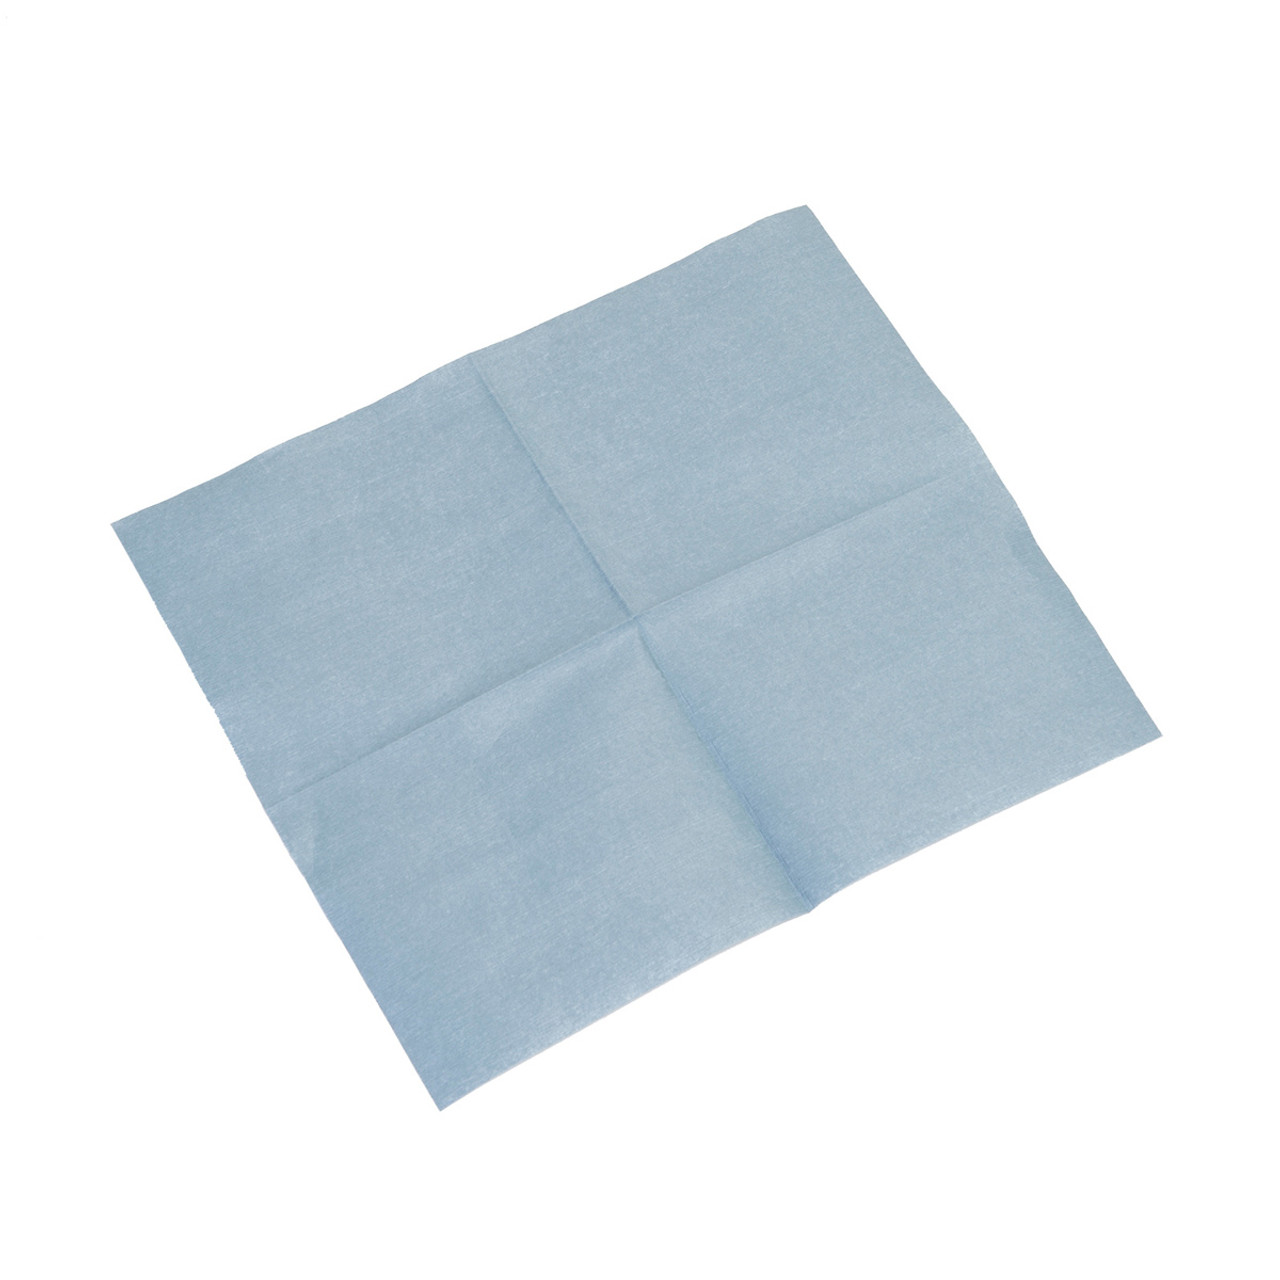 Sontara Industrial Wipes Quarter Fold Wiper Smooth Blue